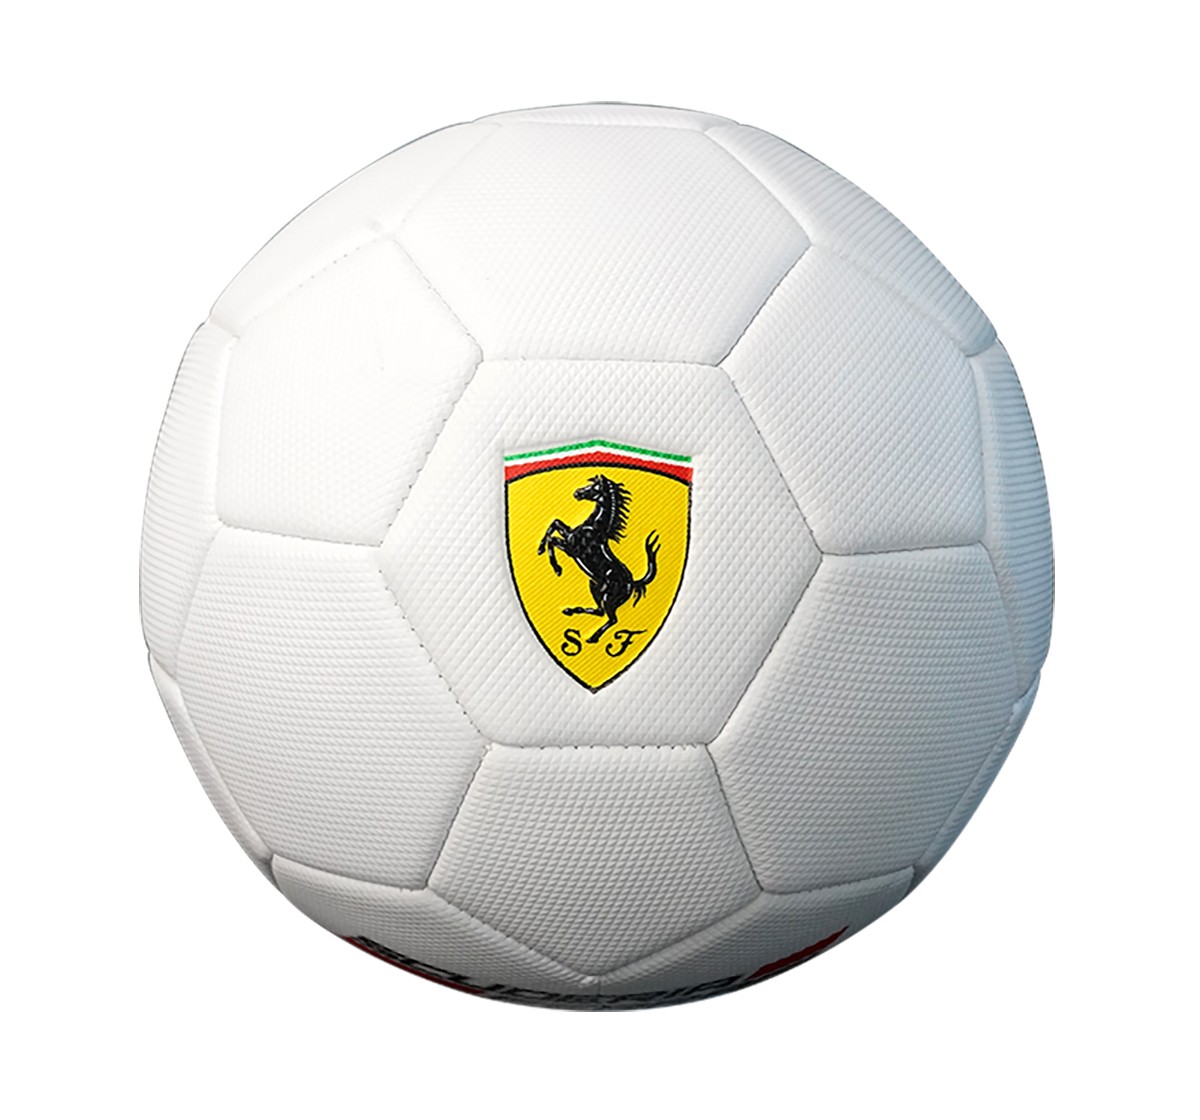 Ferrari Football Size 5 Pvc, Sports & Accessories for Kids age 5Y+ (White)